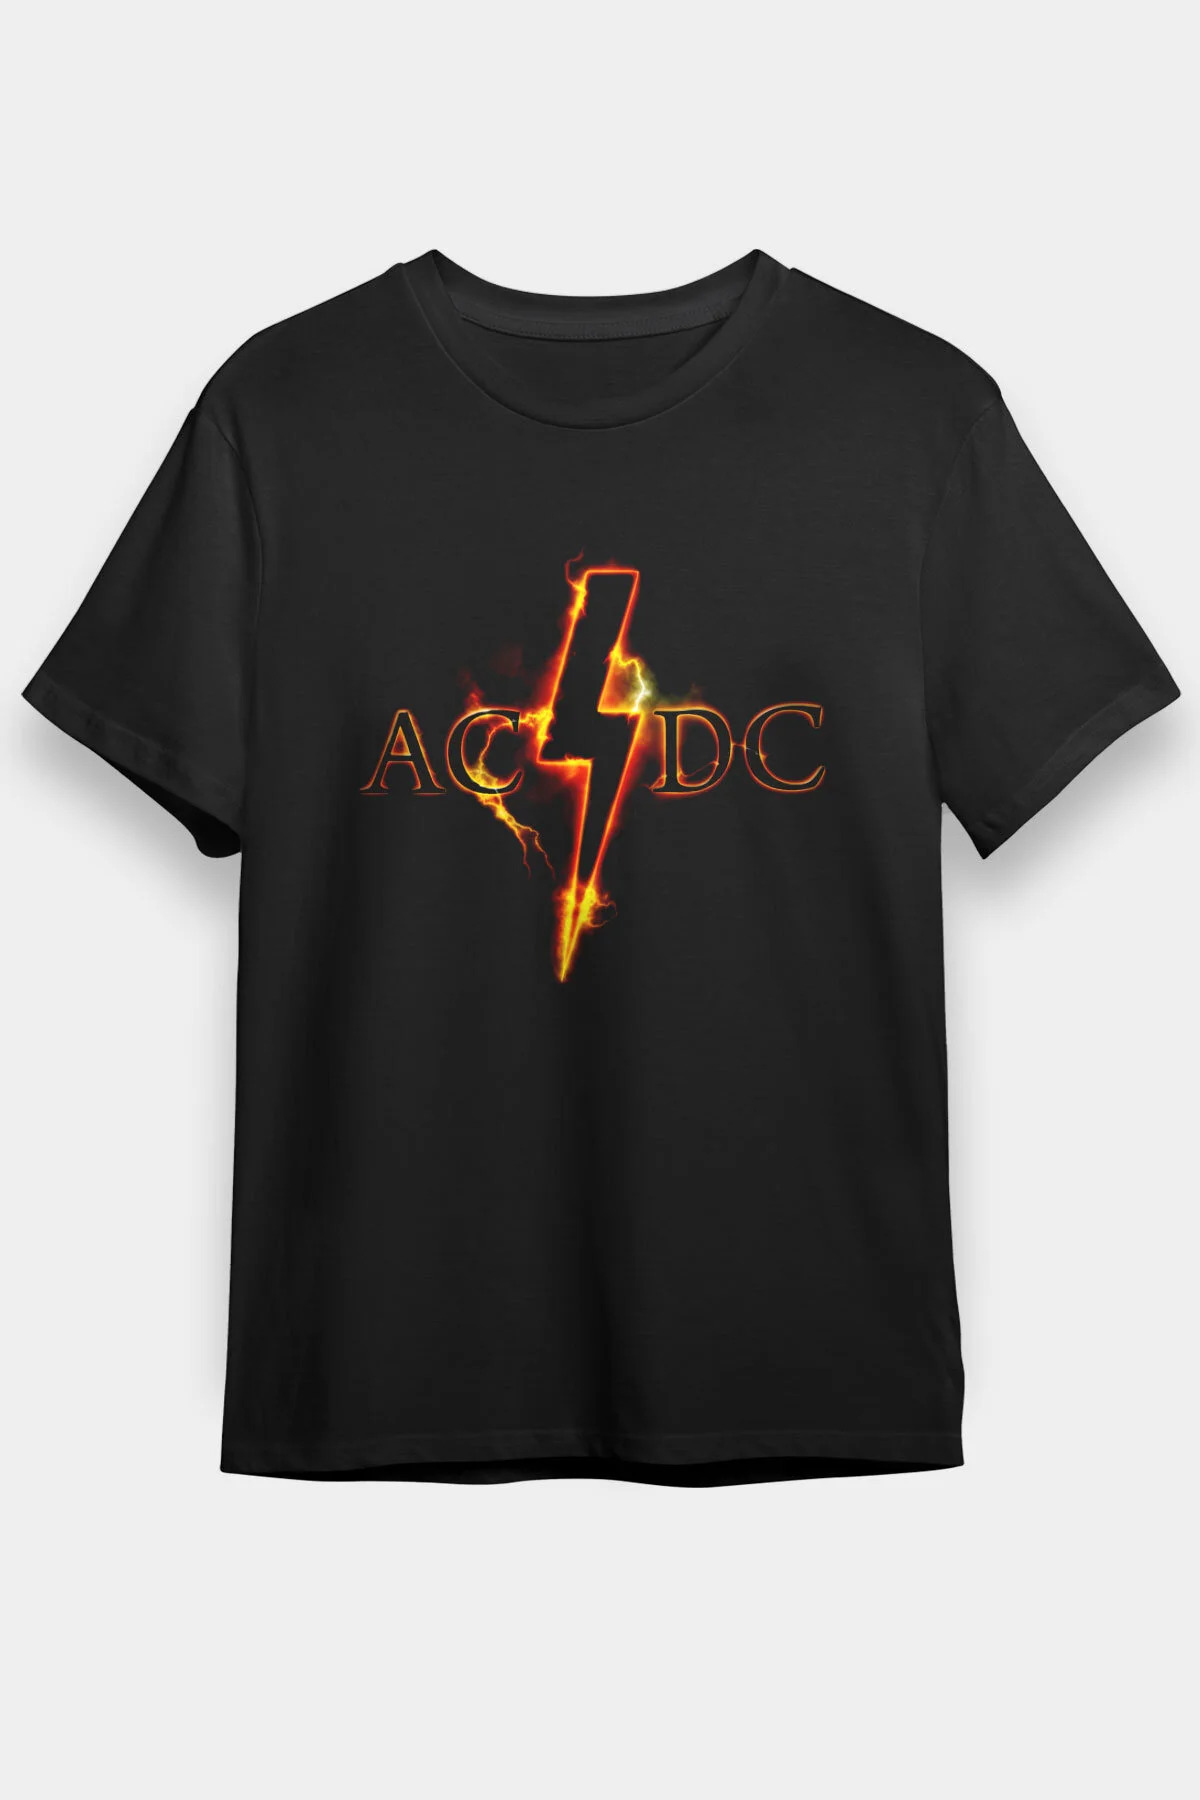 AC DC thunderbolt Unisex Tshirt 063  /